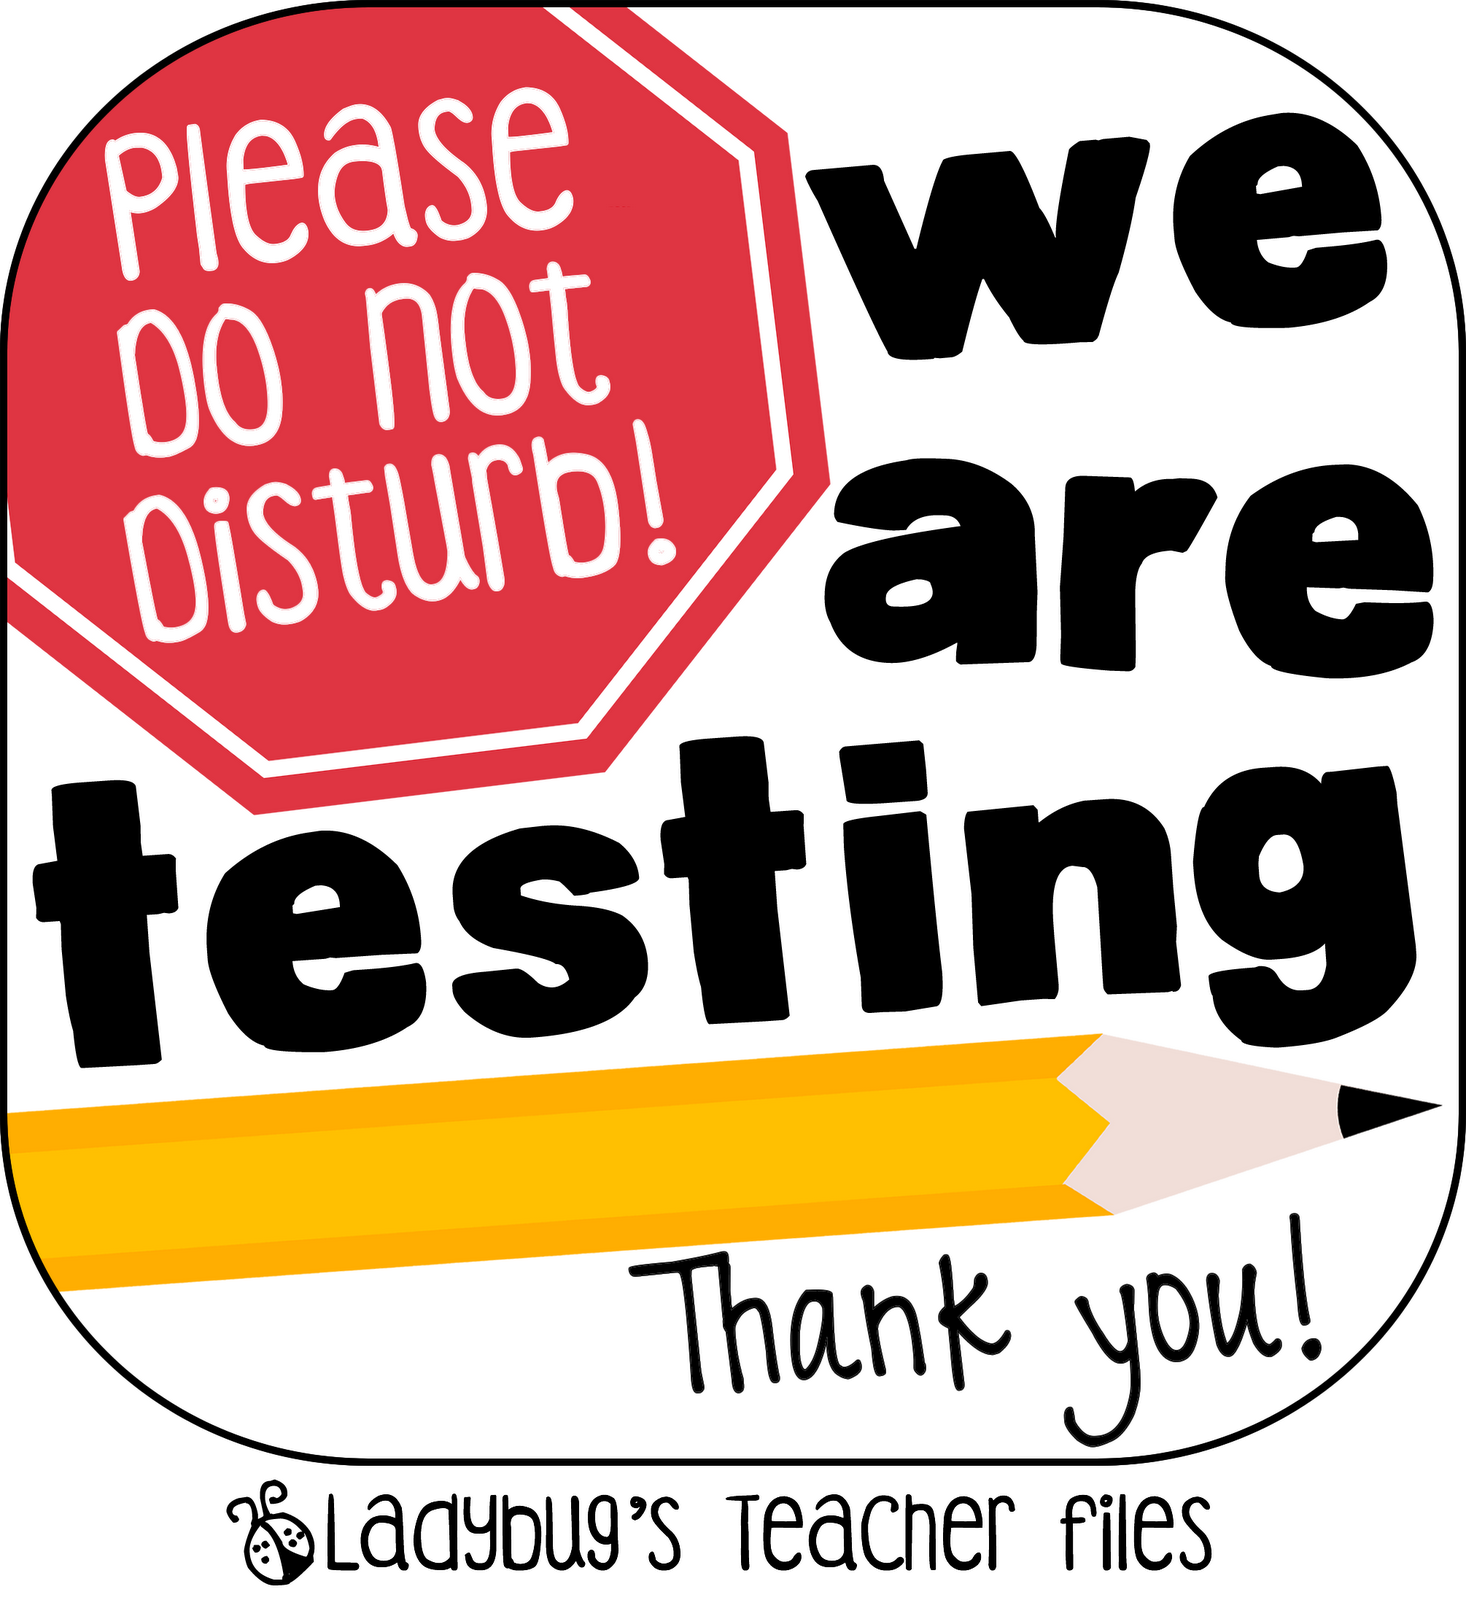 Testing Sign! Ladybug's Teacher Files